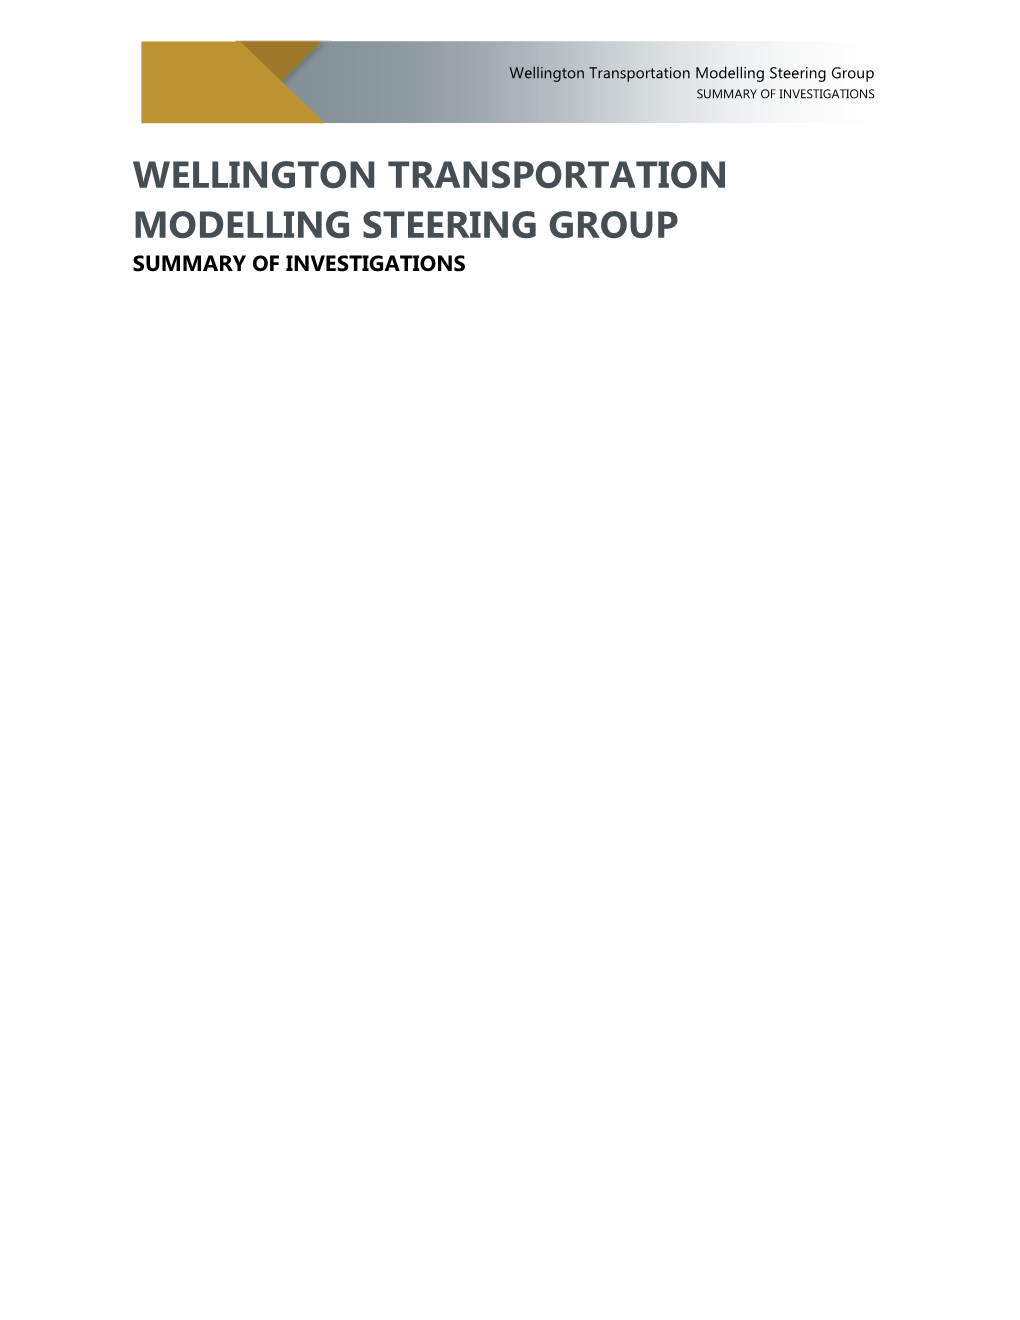 Wellington Transportation Modelling Steering Group Report – Final 1 St March 2016